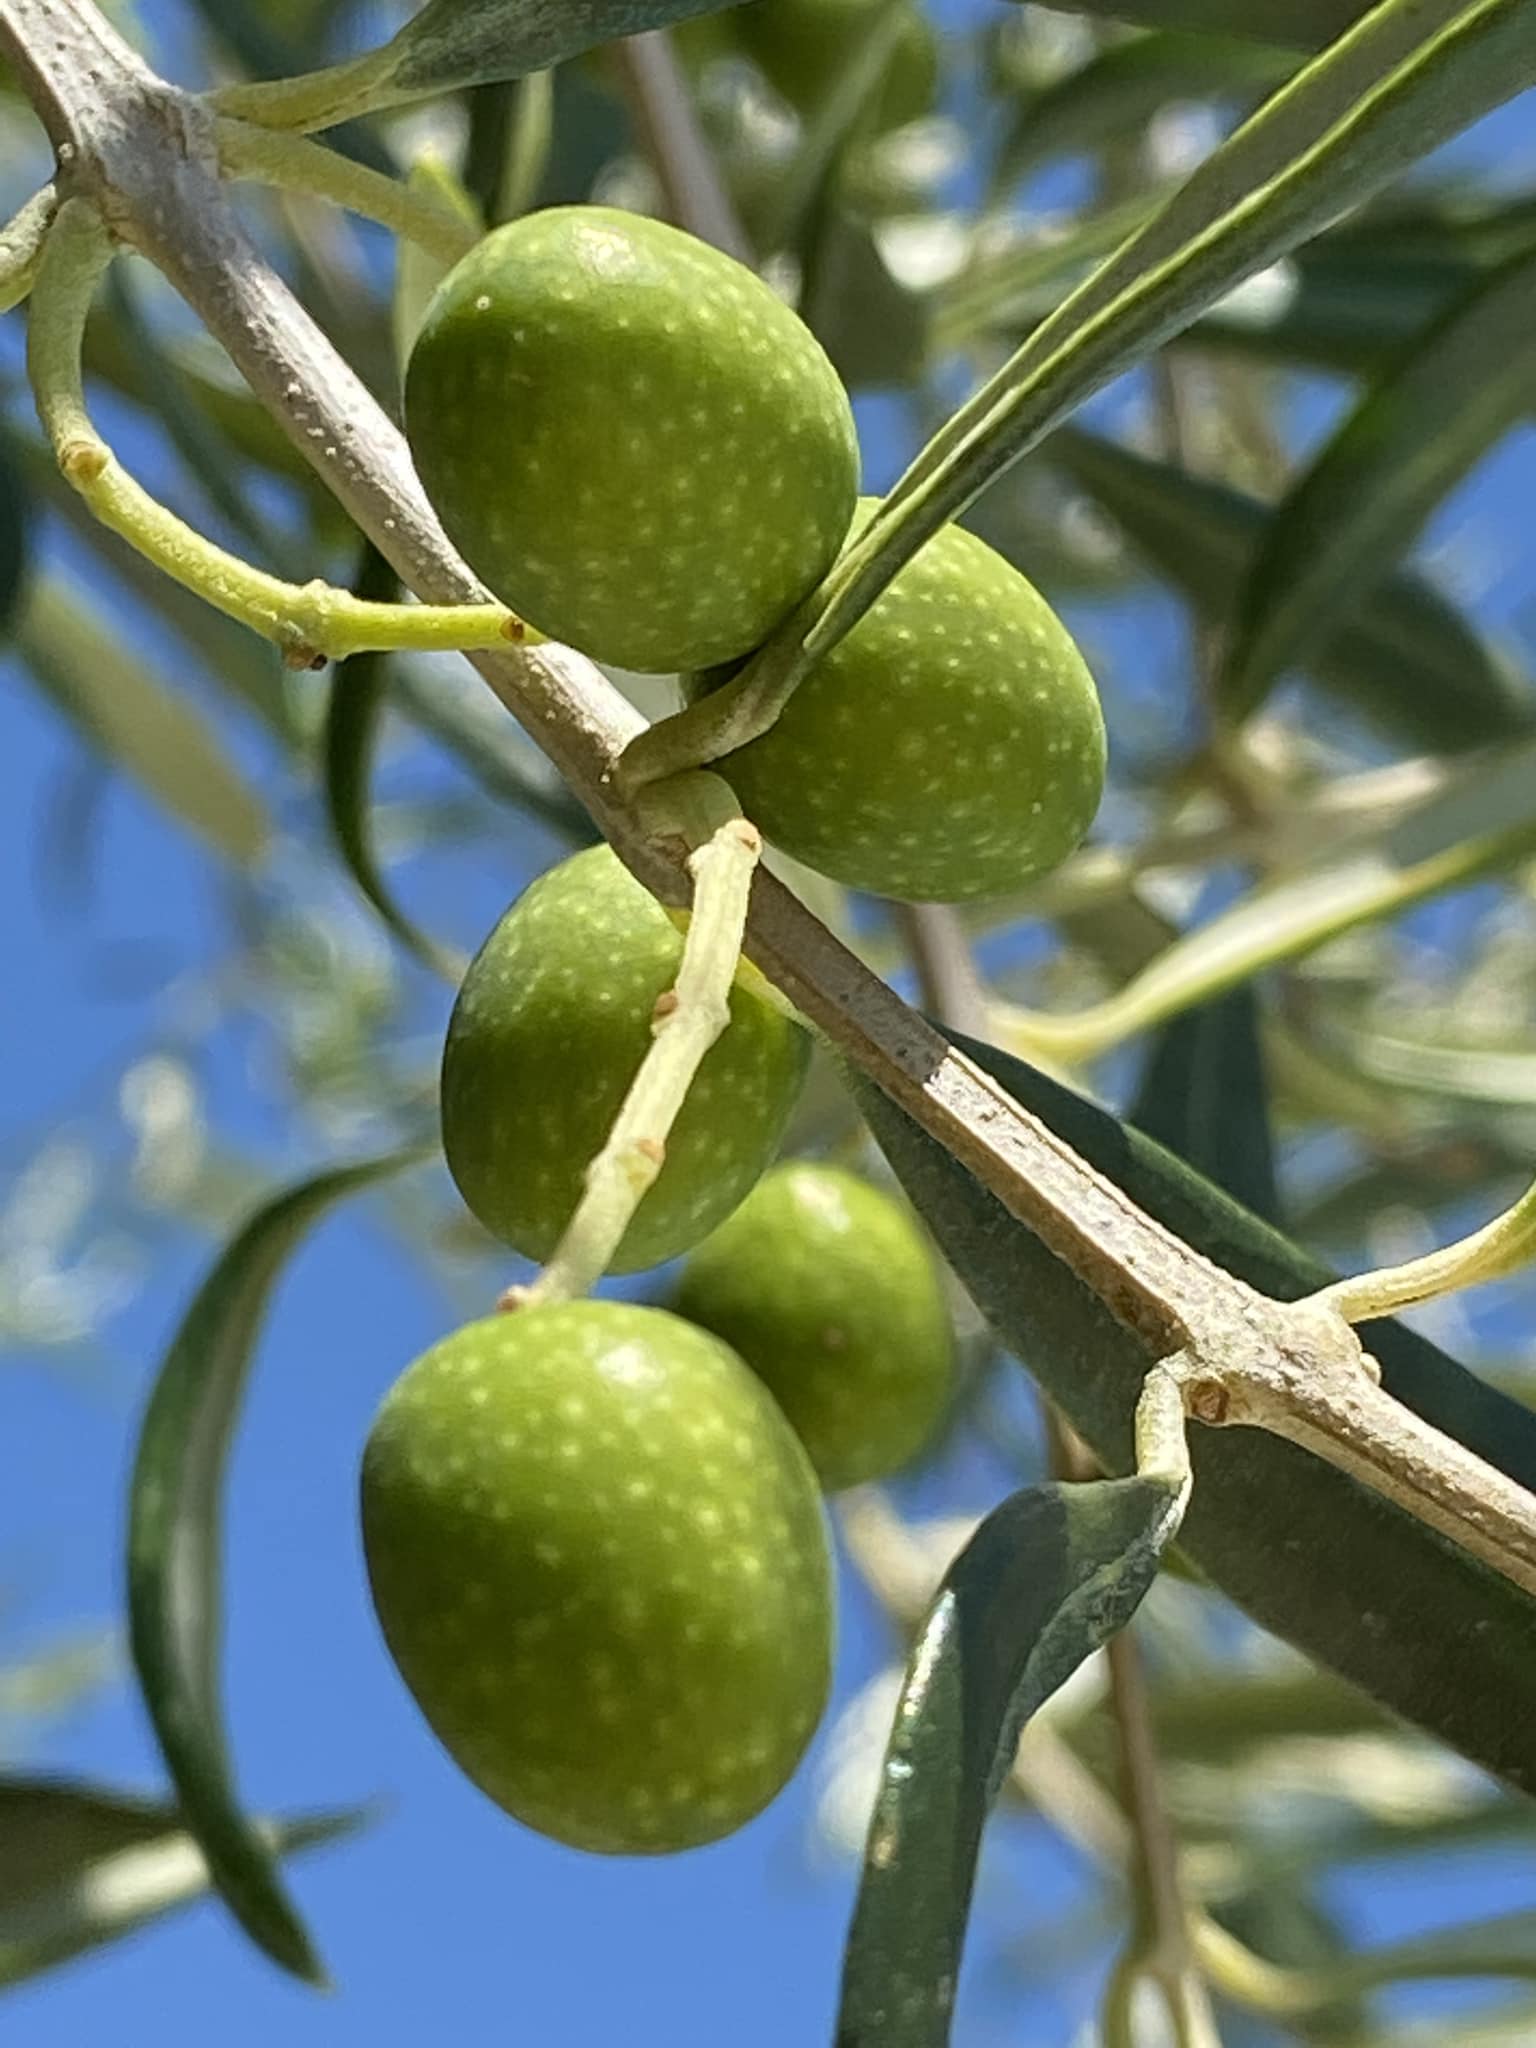 Artisan Olive Oil Company